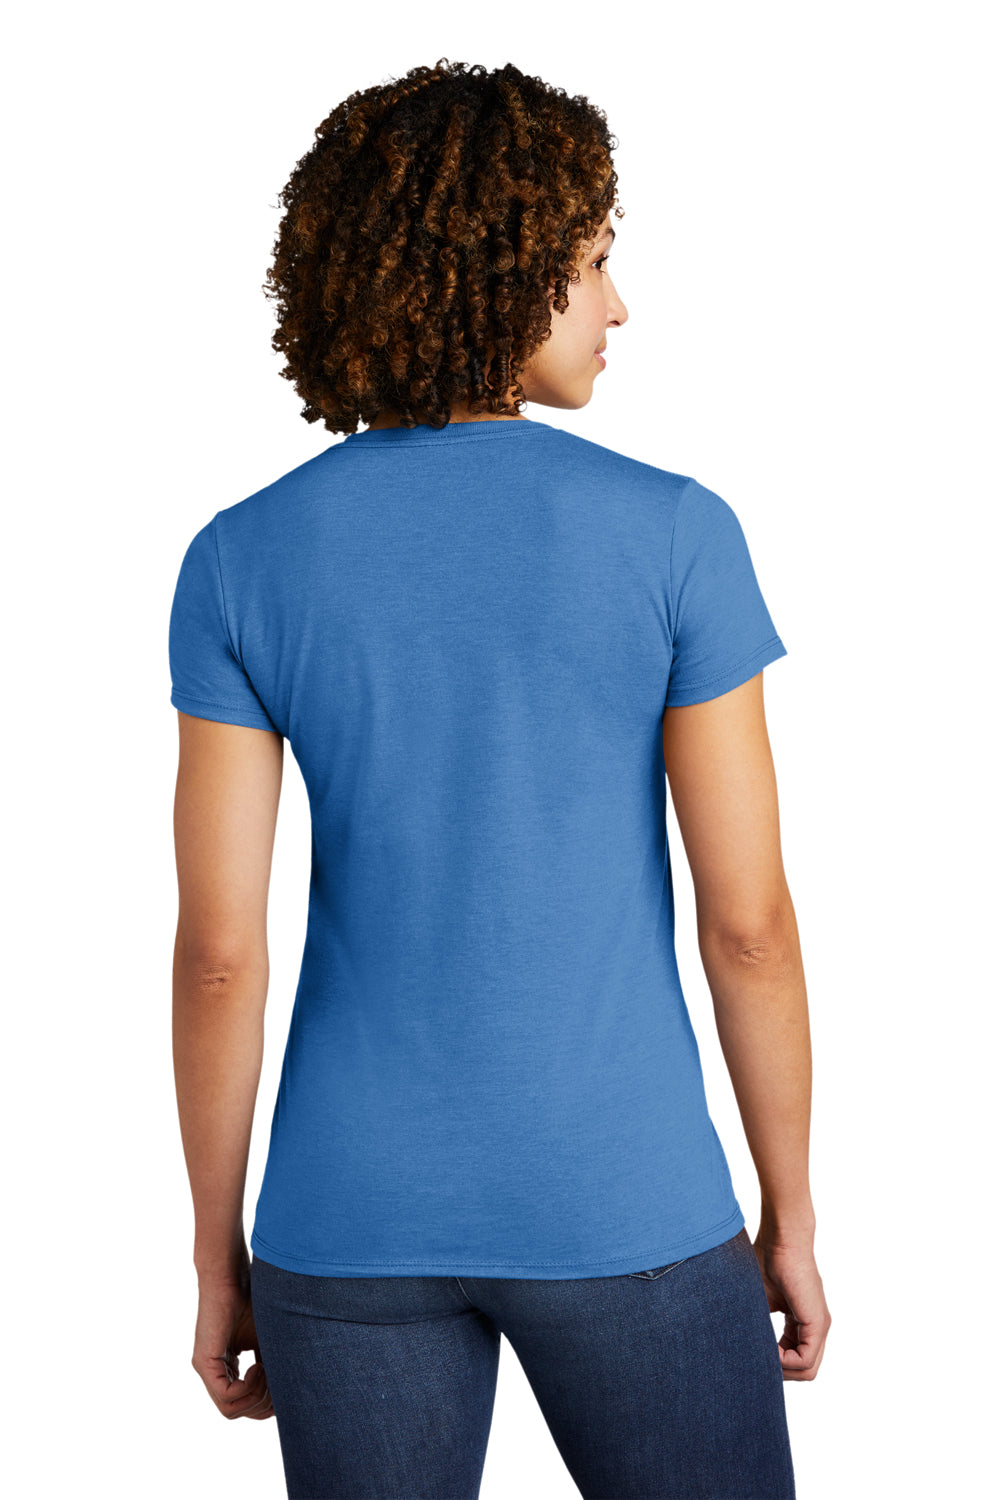 Allmade AL2008 Womens Short Sleeve Crewneck T-Shirt Azure Blue Model Back